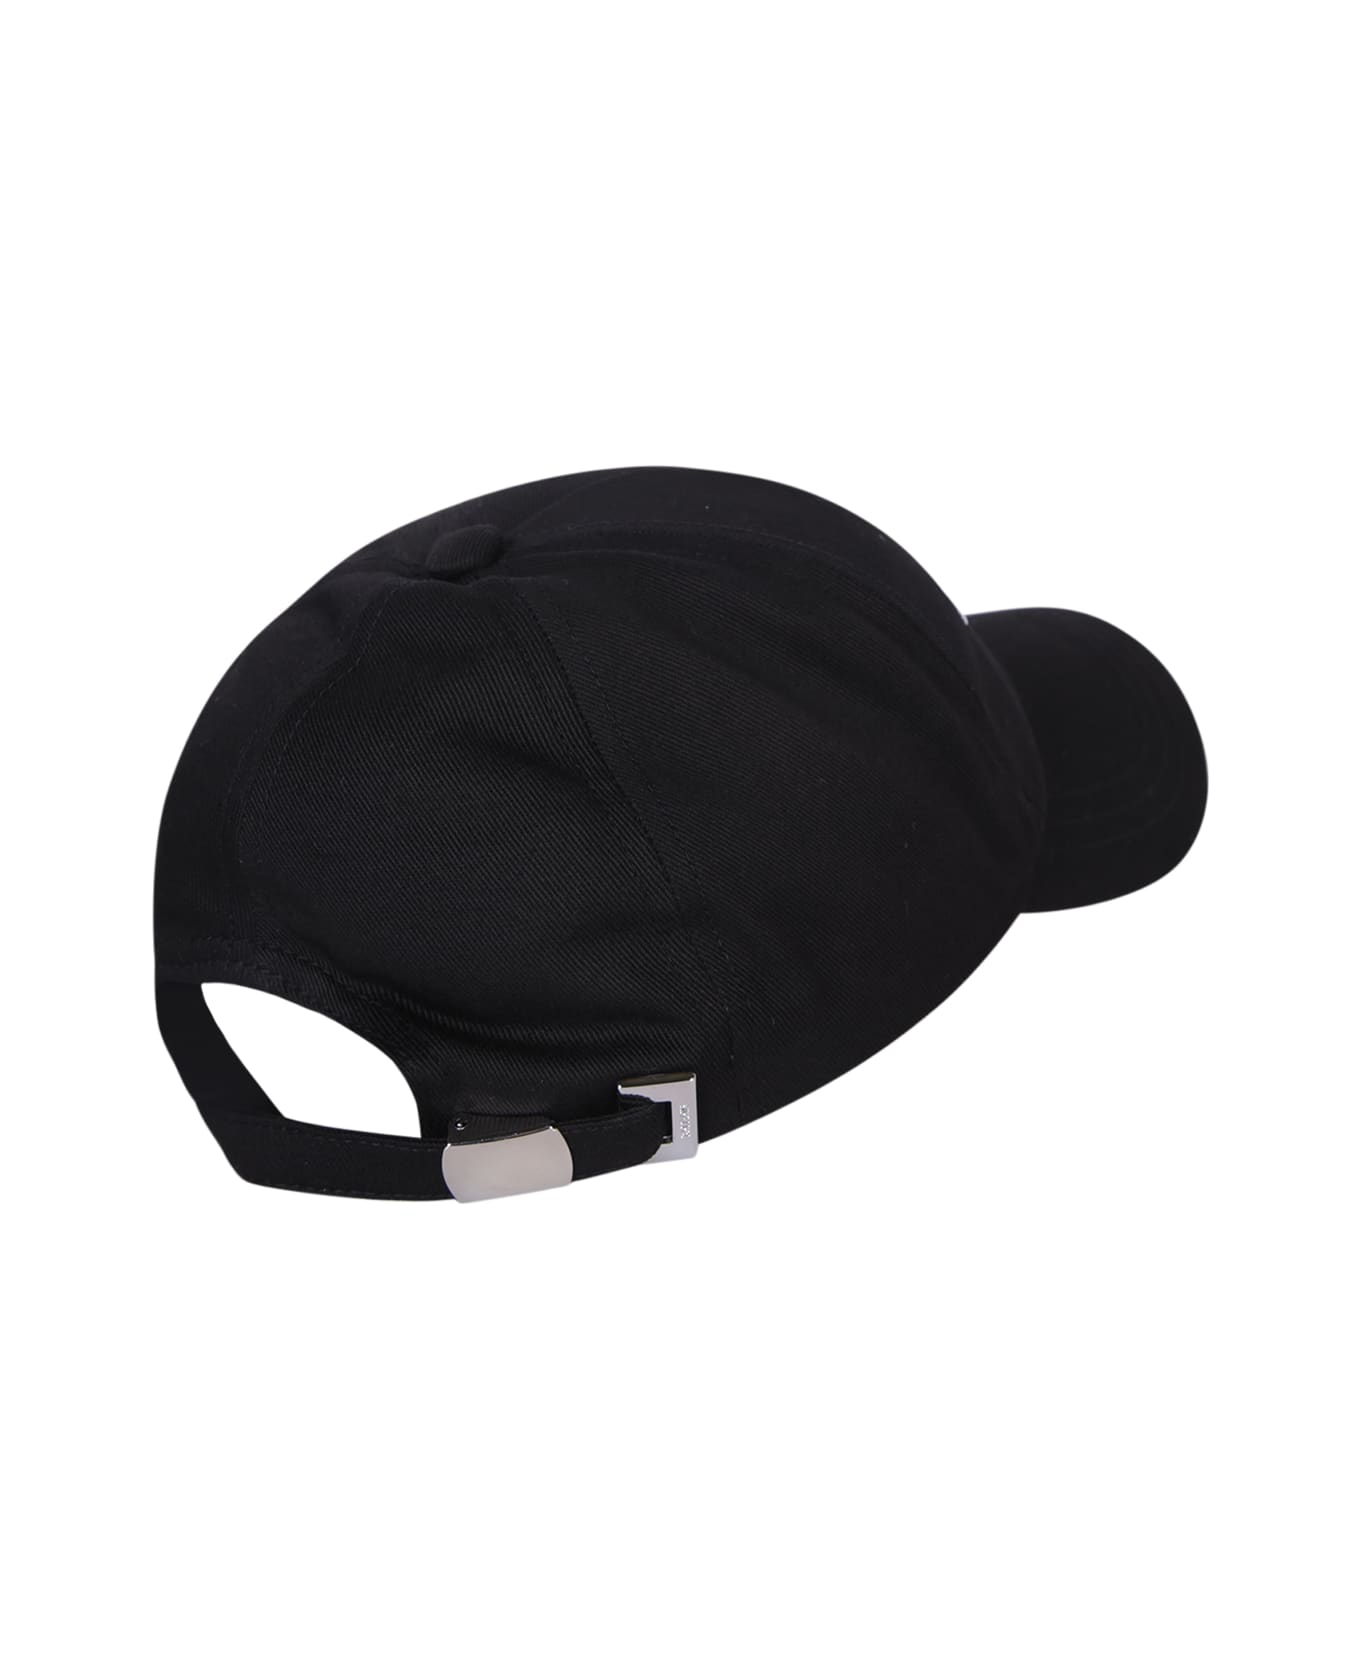 Balmain Logo Black Baseball Cap - Black